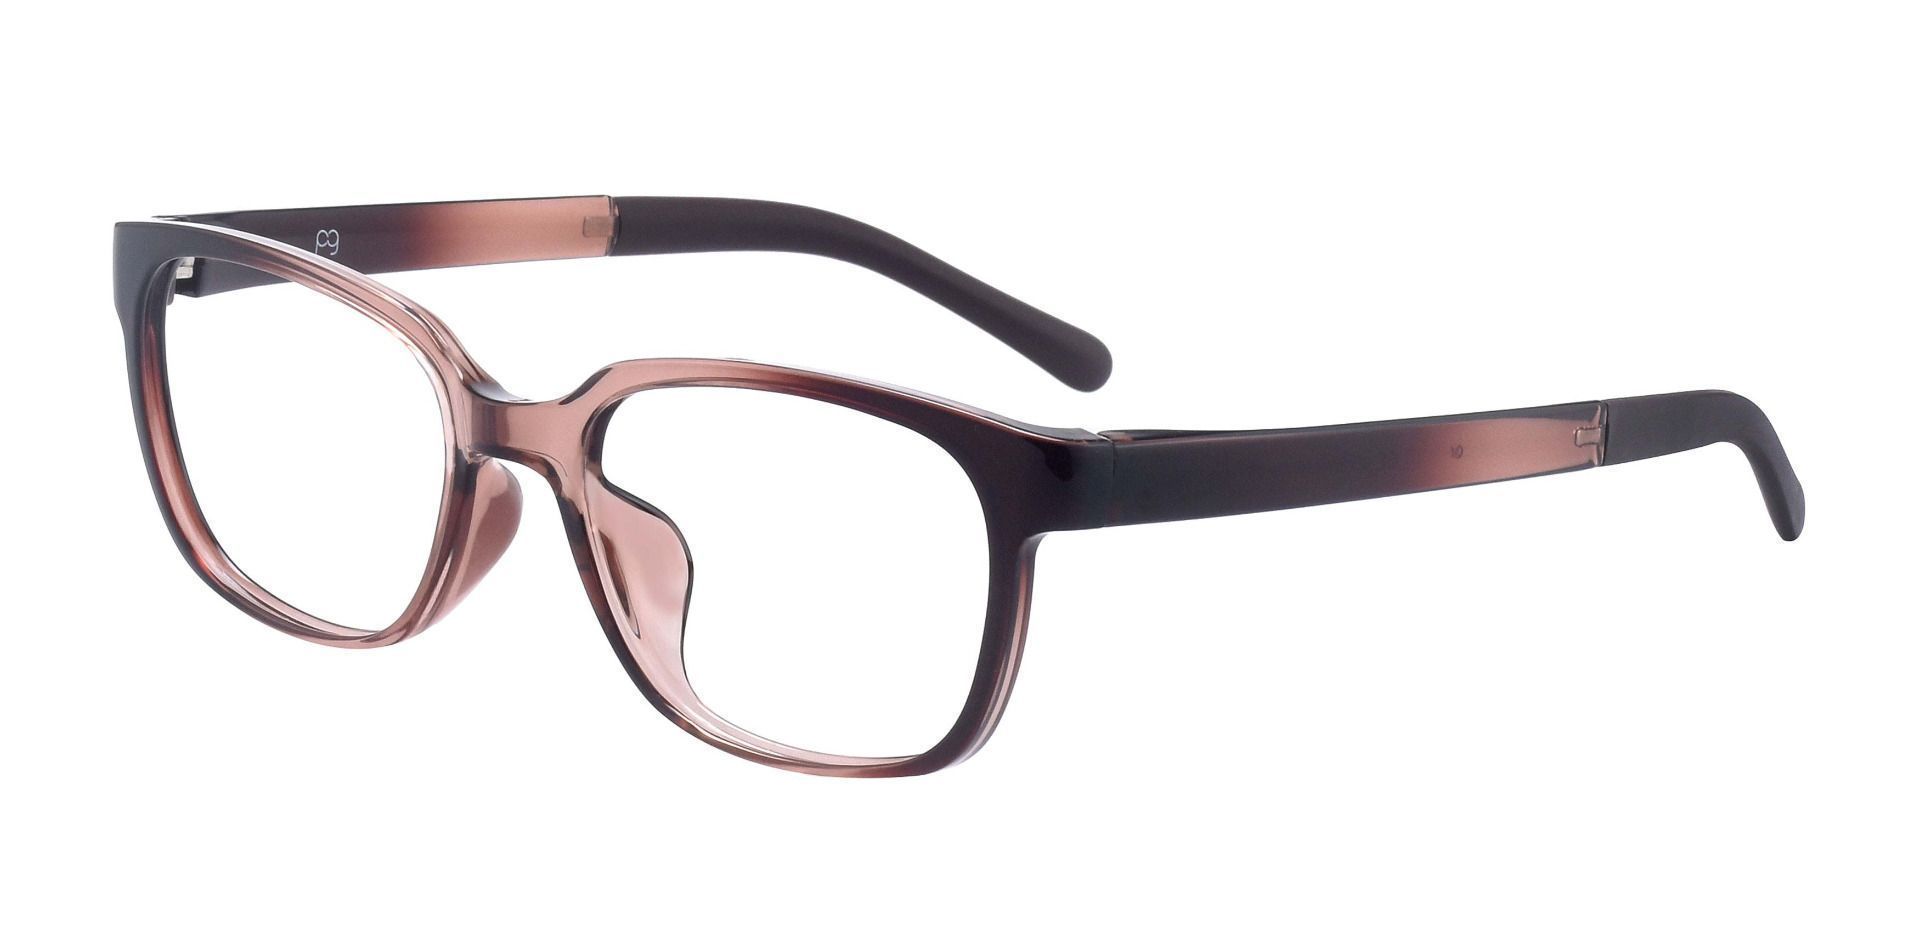 Darwin Classic Square Lined Bifocal Glasses - Brown